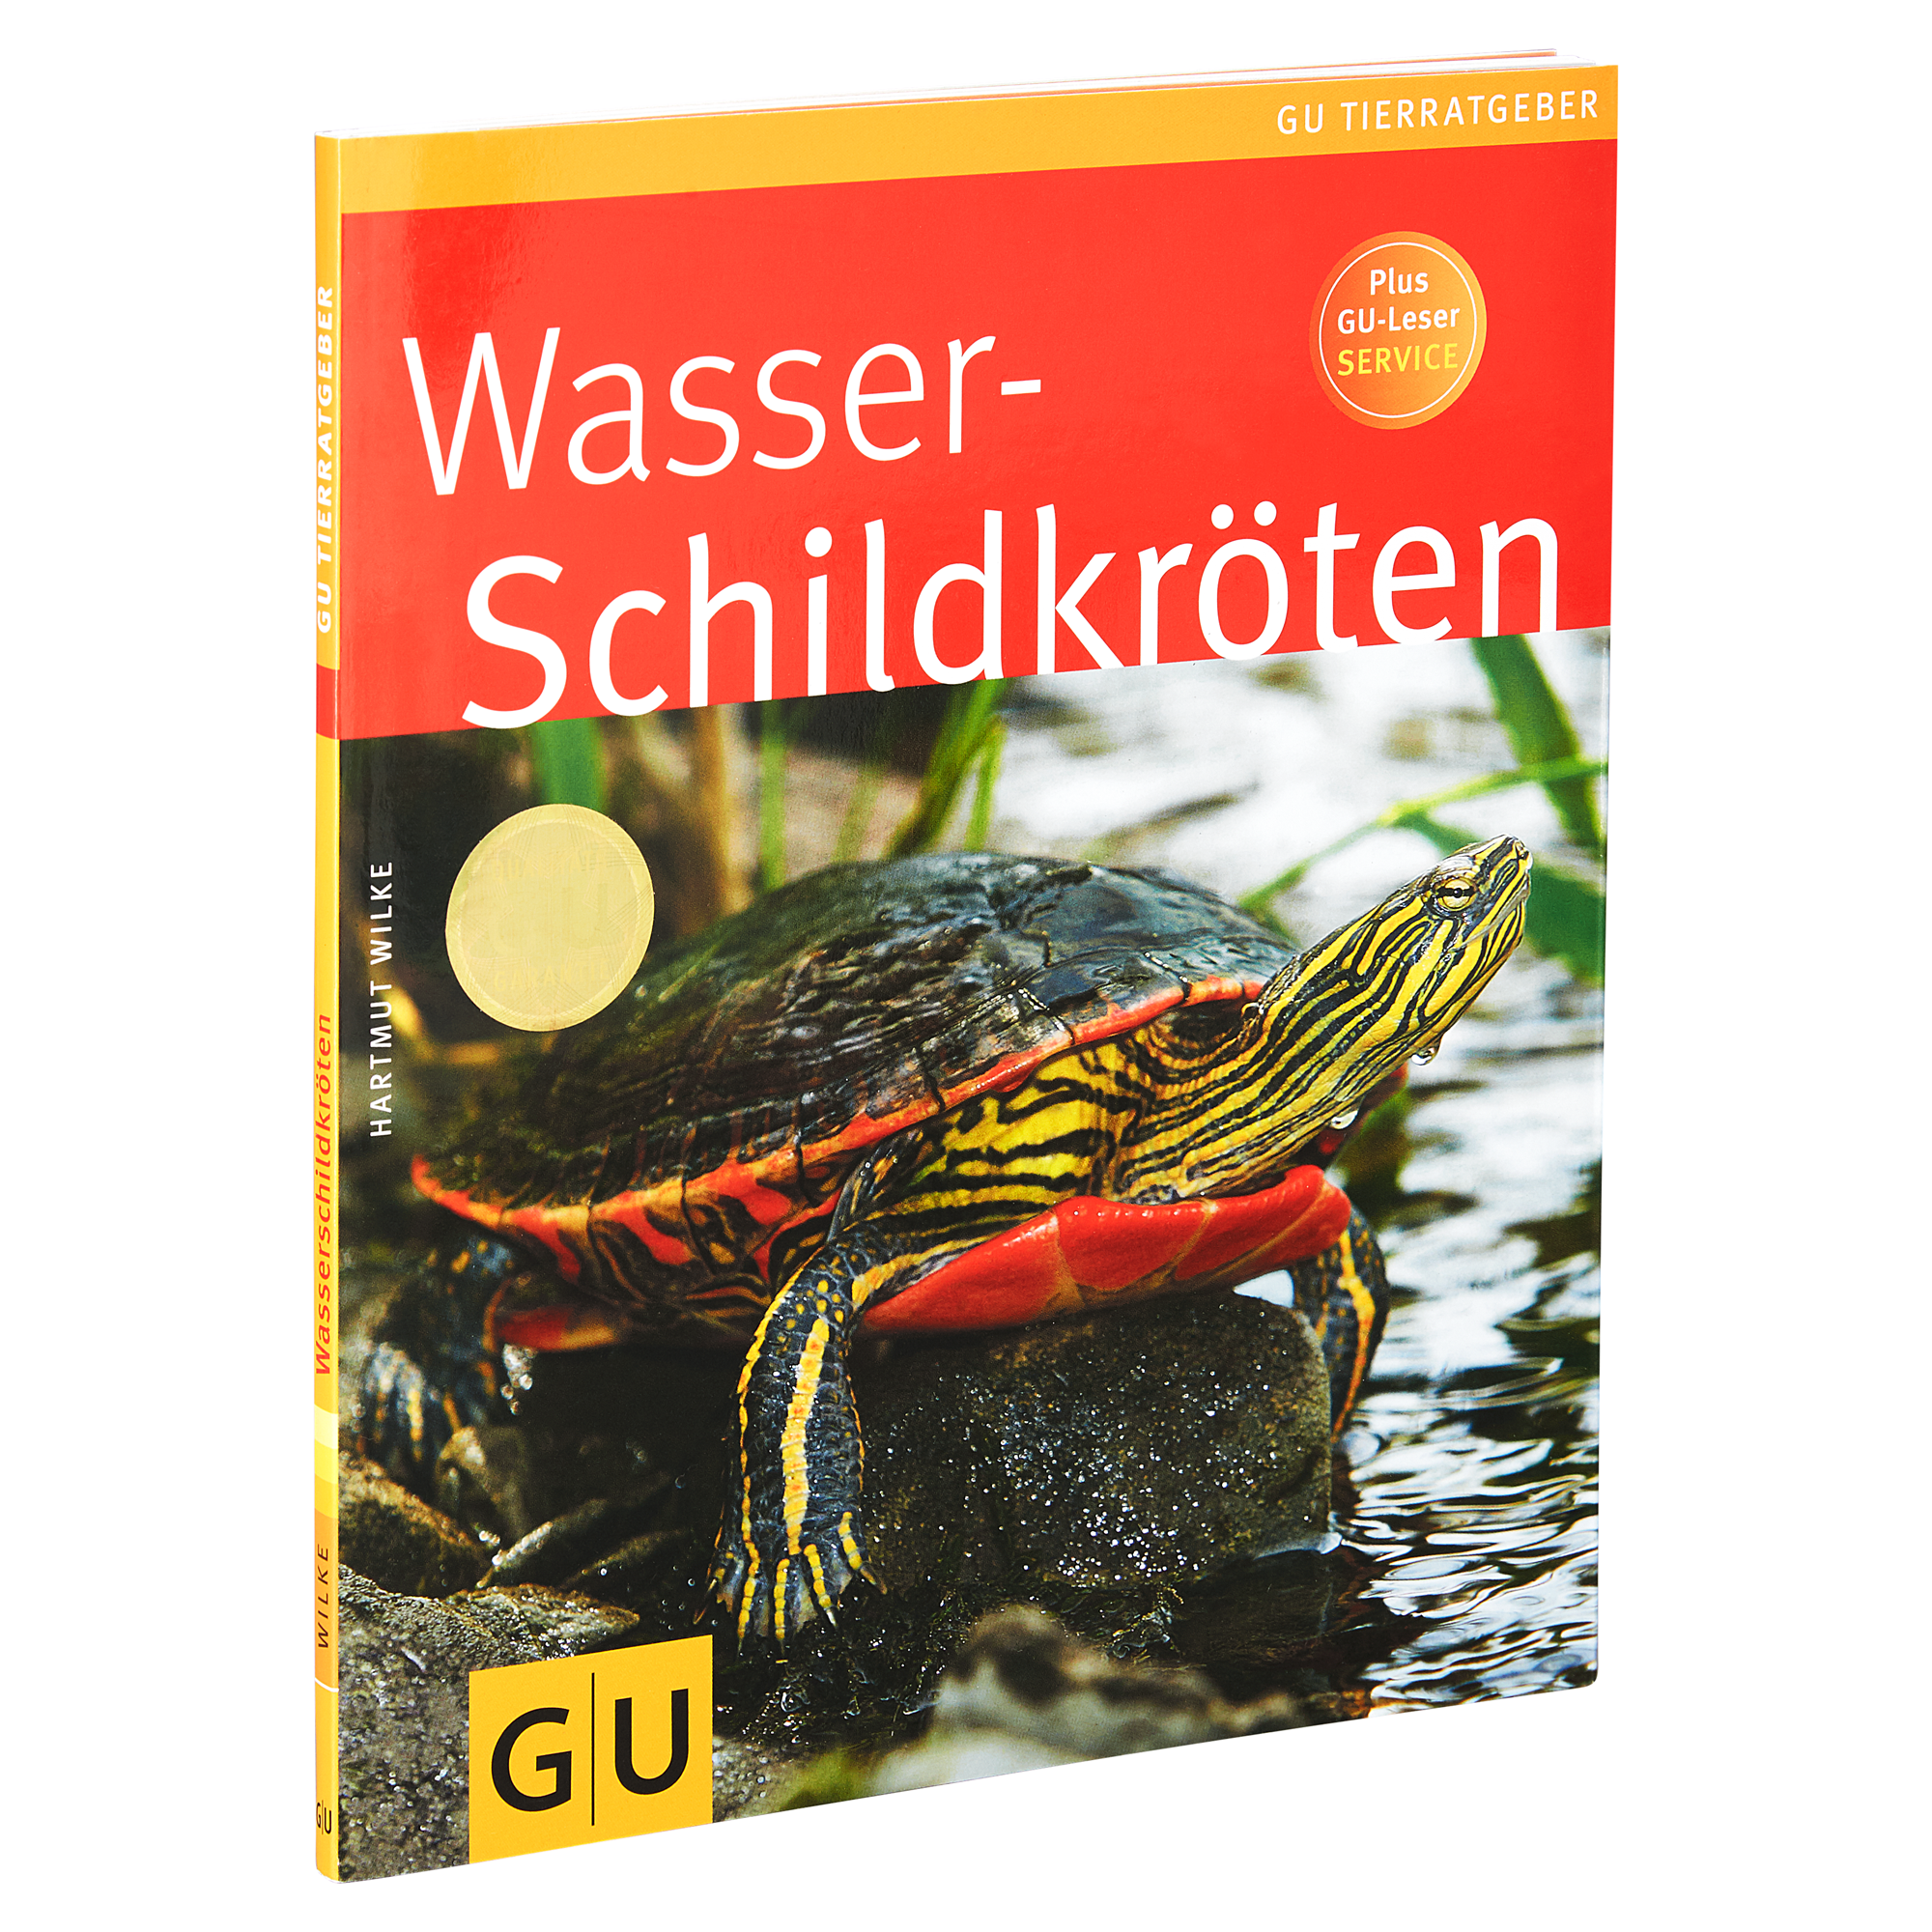 GU-Tierratgeber "Wasserschildkröten" PB 64 S. + product picture